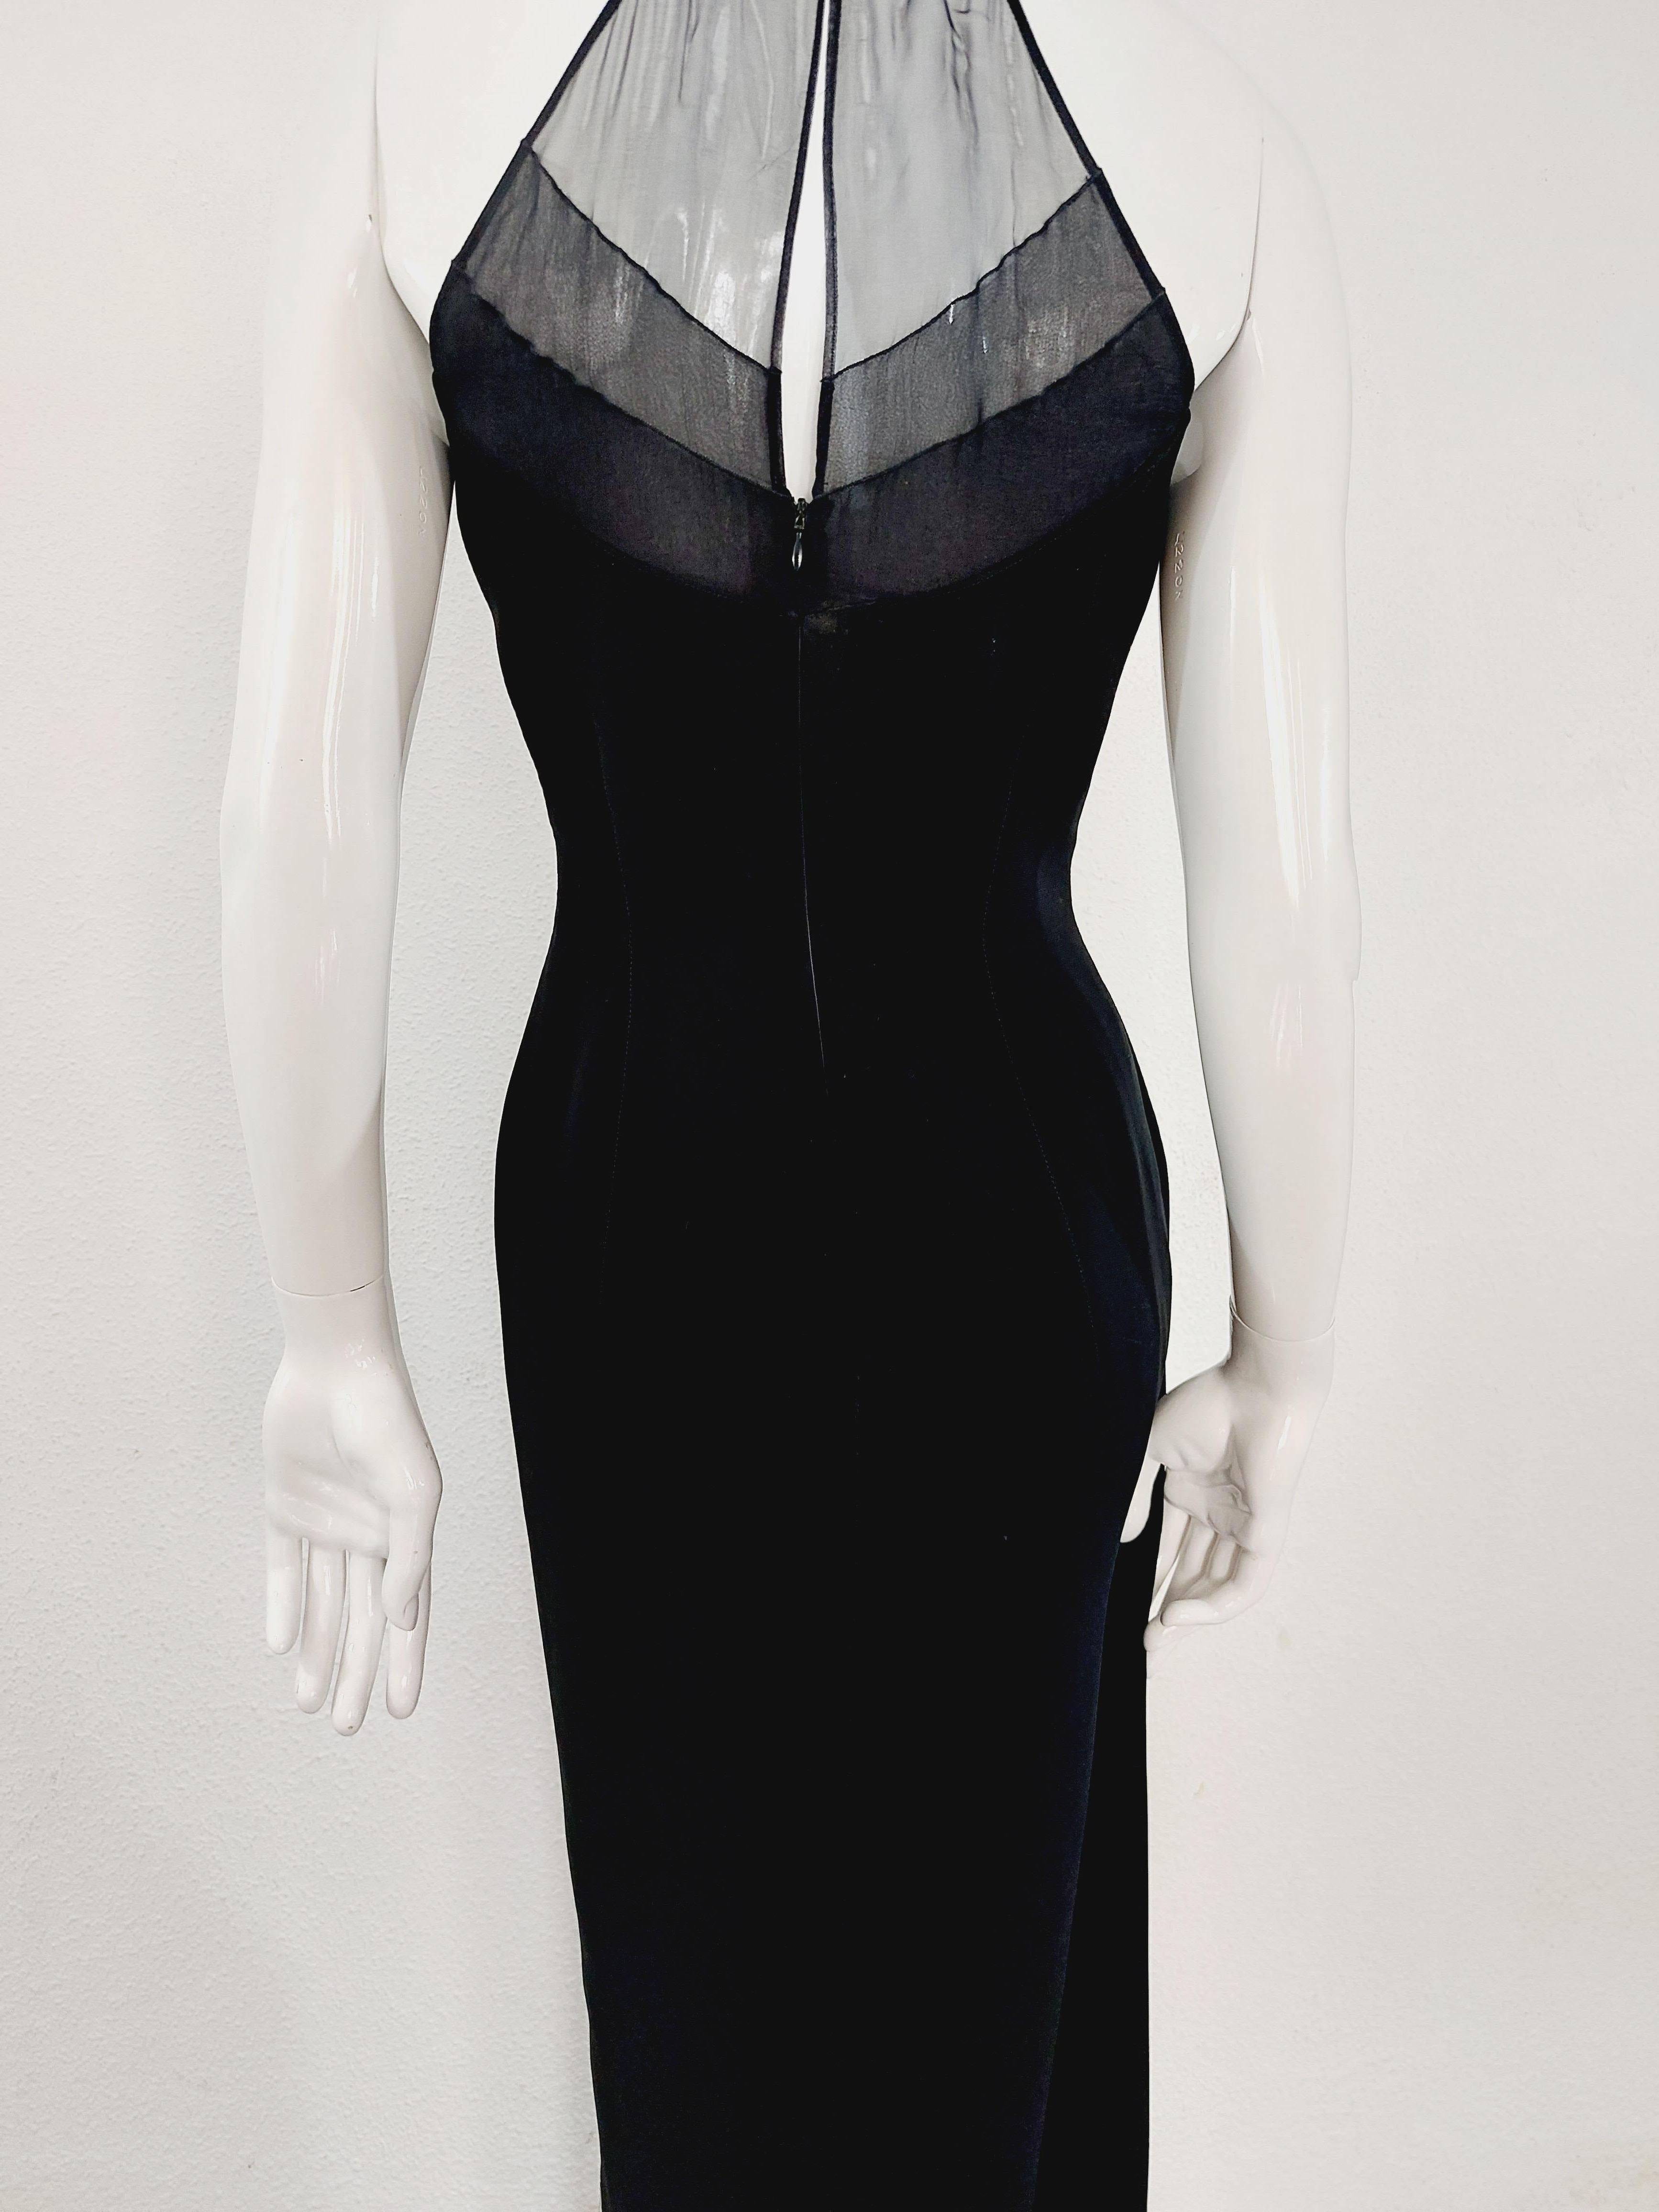 Thierry Mugler Black Elegant Mesh Transparent Formal Cocktail Evening Gown Dress 8